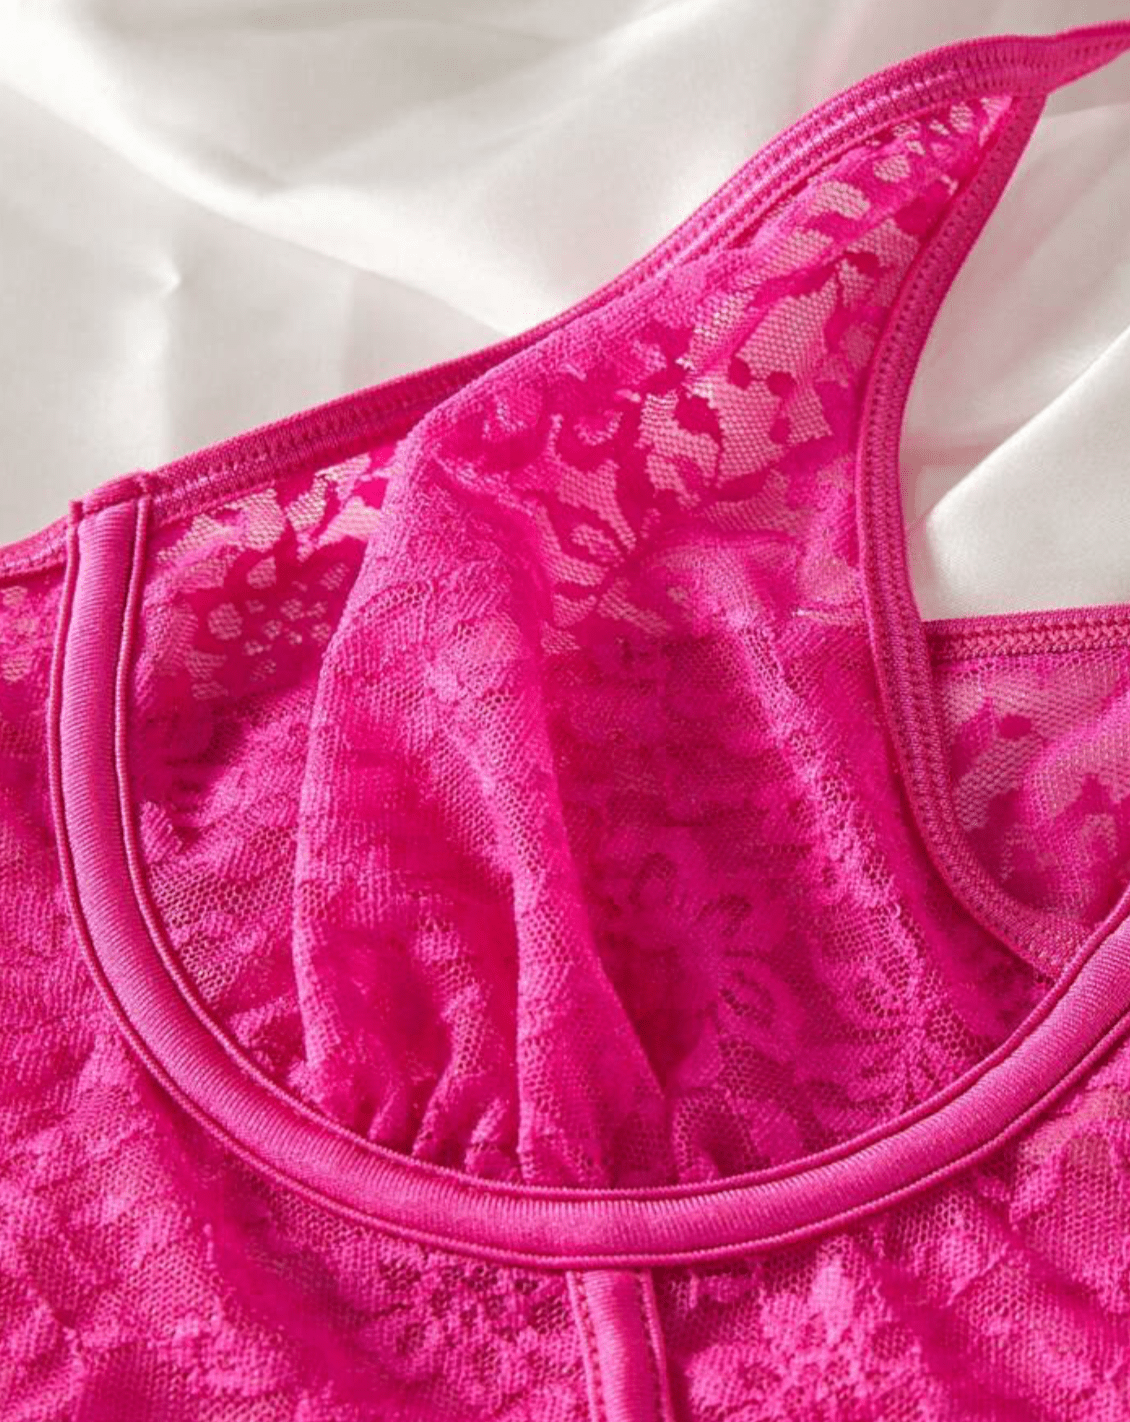 pink lace lingerie